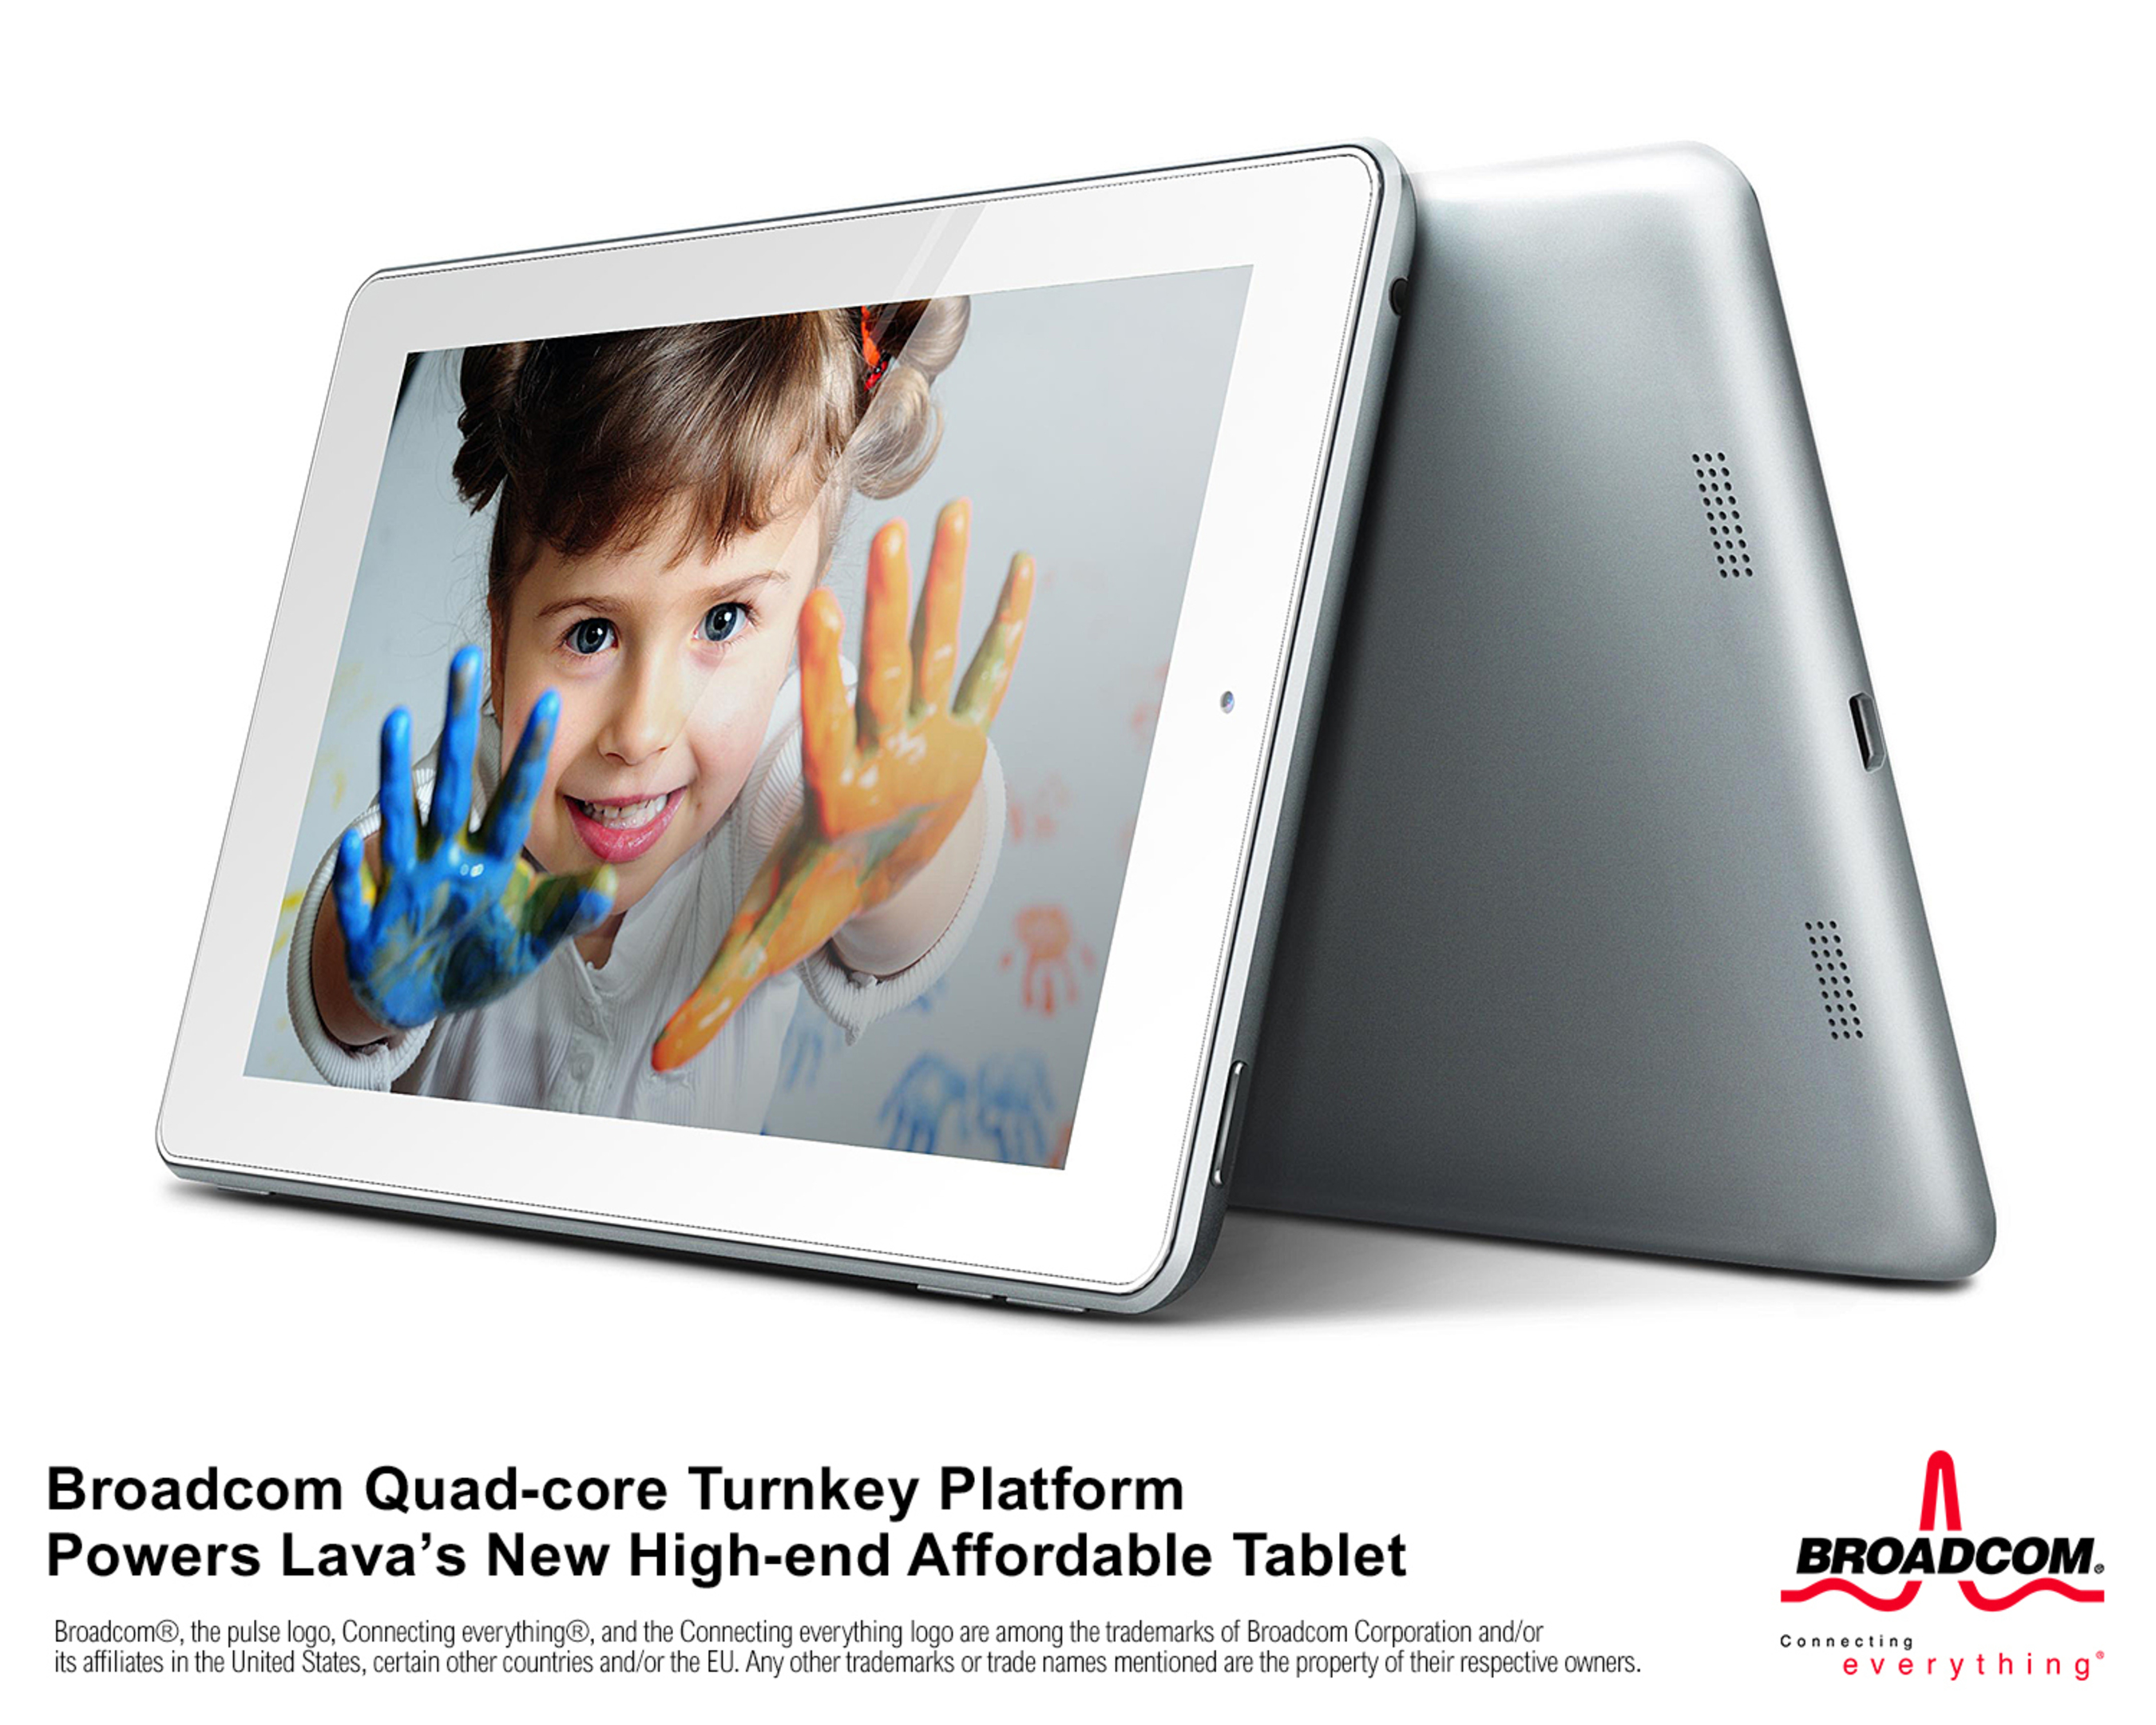 Broadcom Quad-core Turnkey Platform Powers Lava’s New High-end Affordable Tablet (PRNewsFoto/Broadcom Corporation)